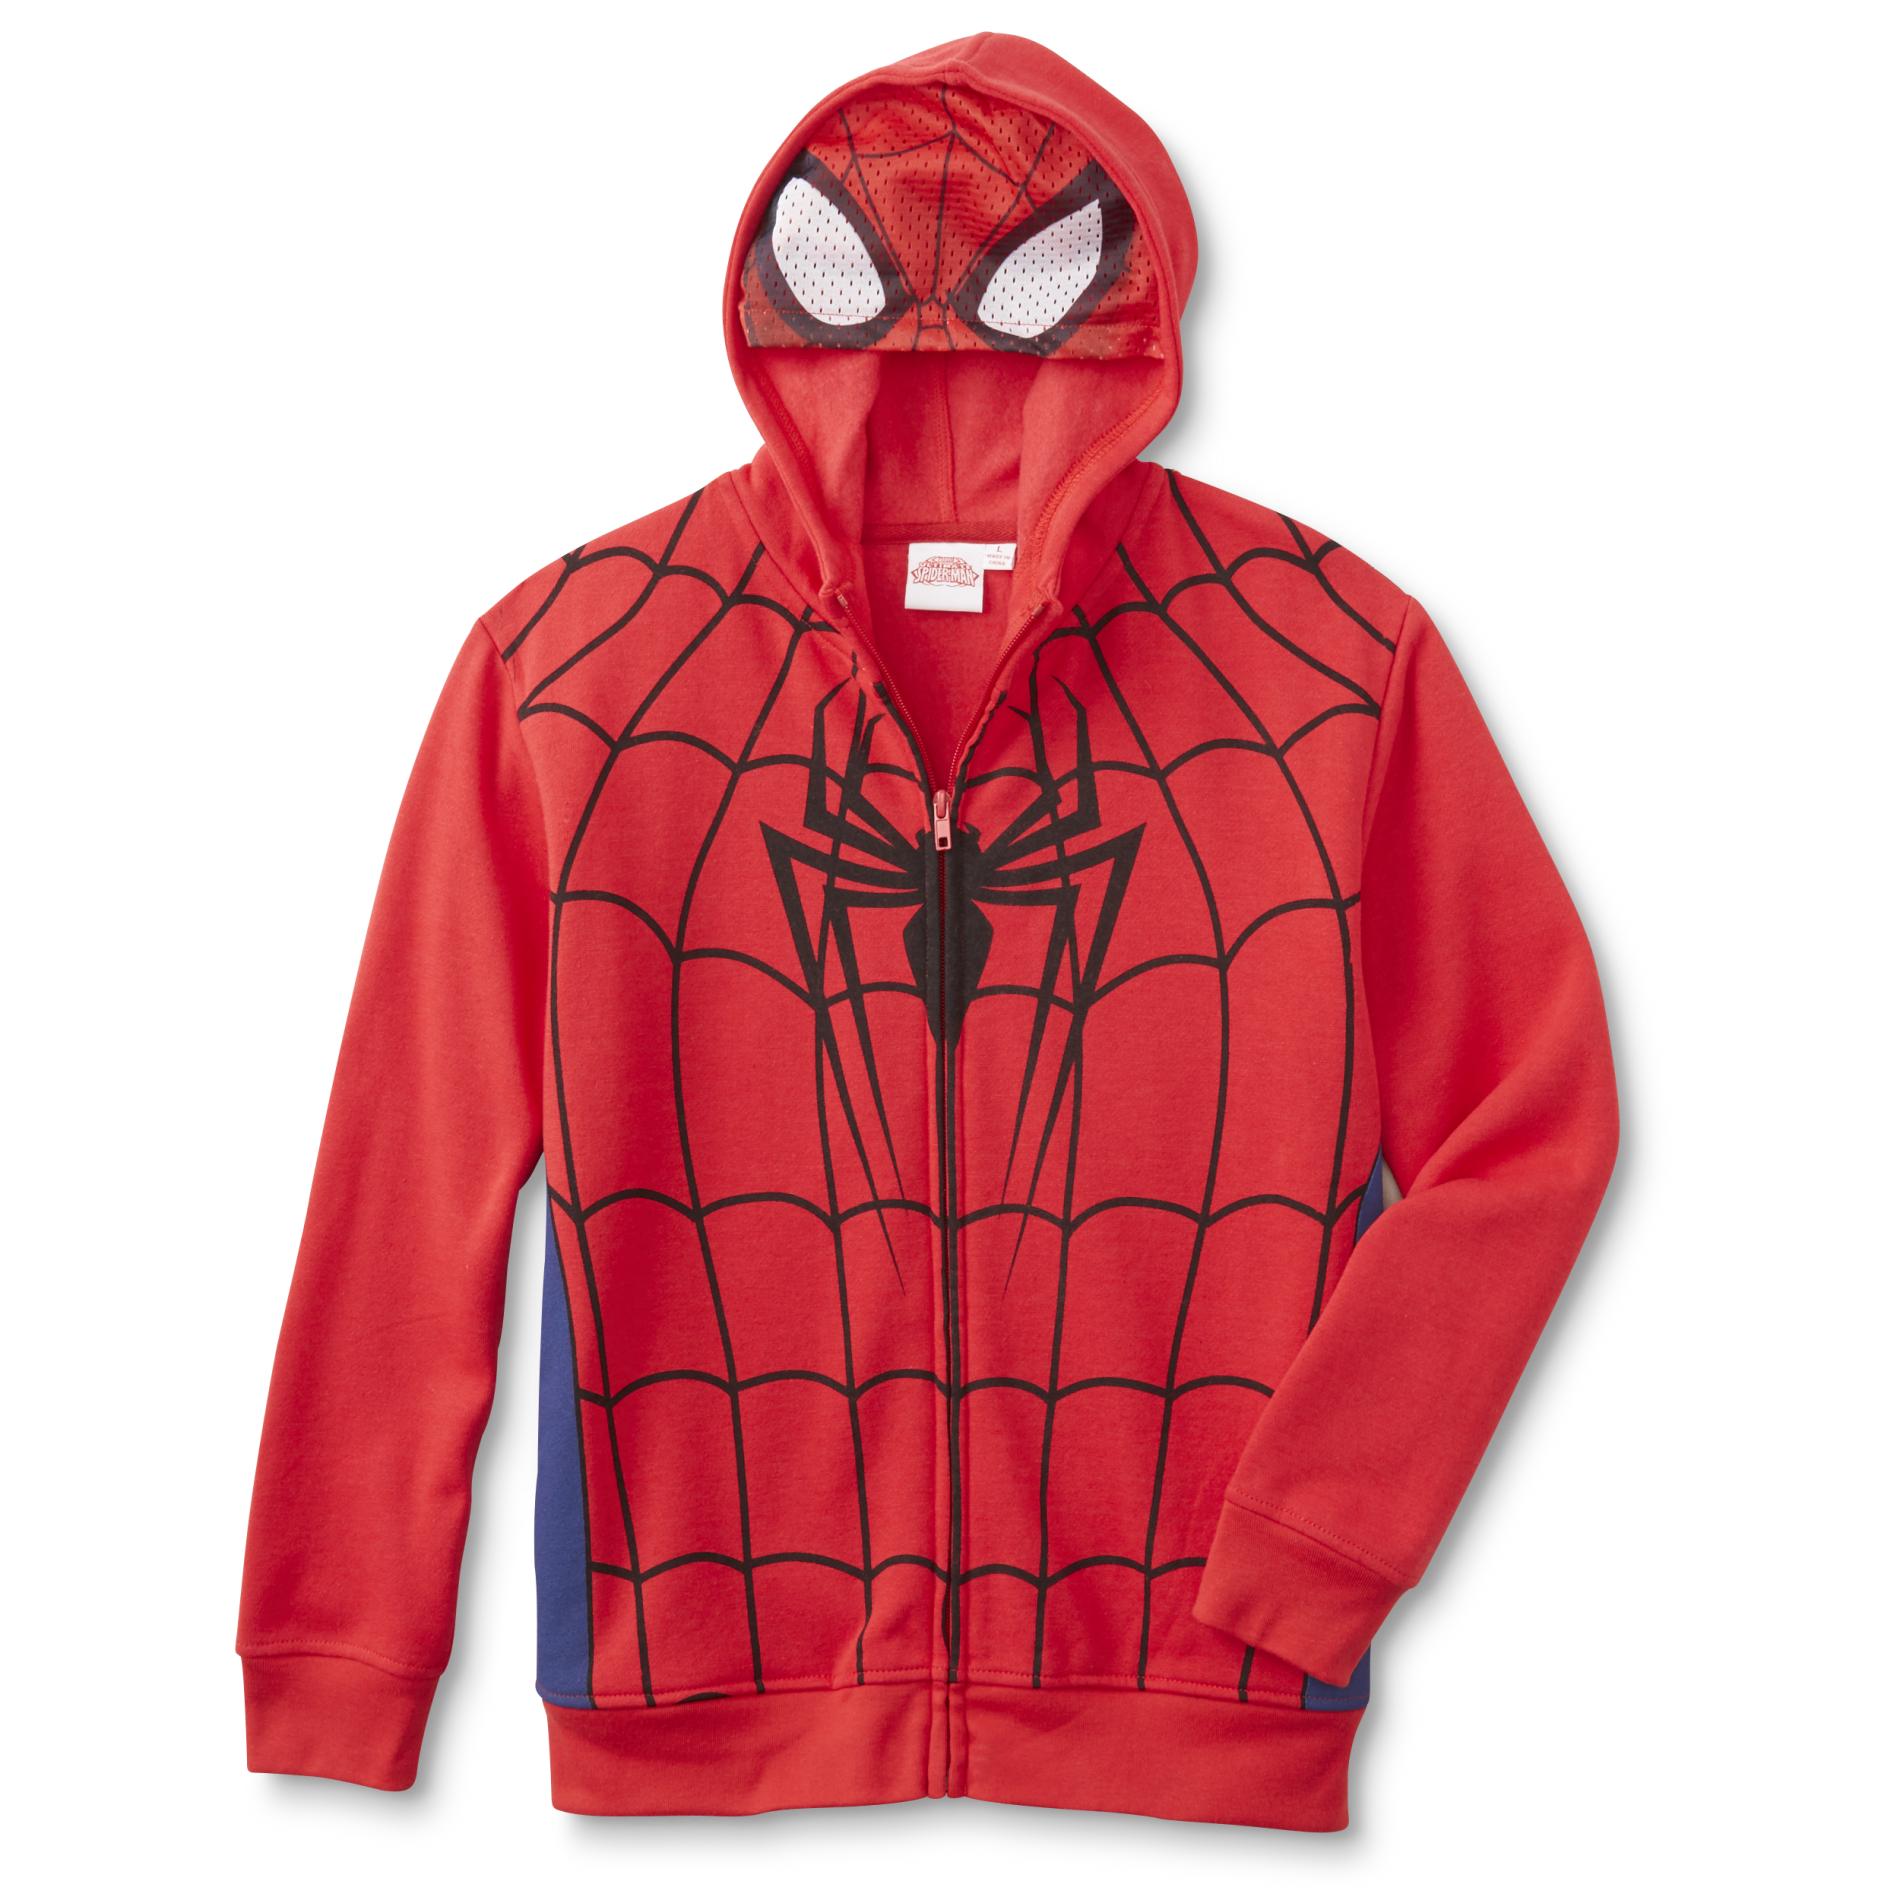 Marvel Spider-Man Boy's Costume Hoodie Jacket